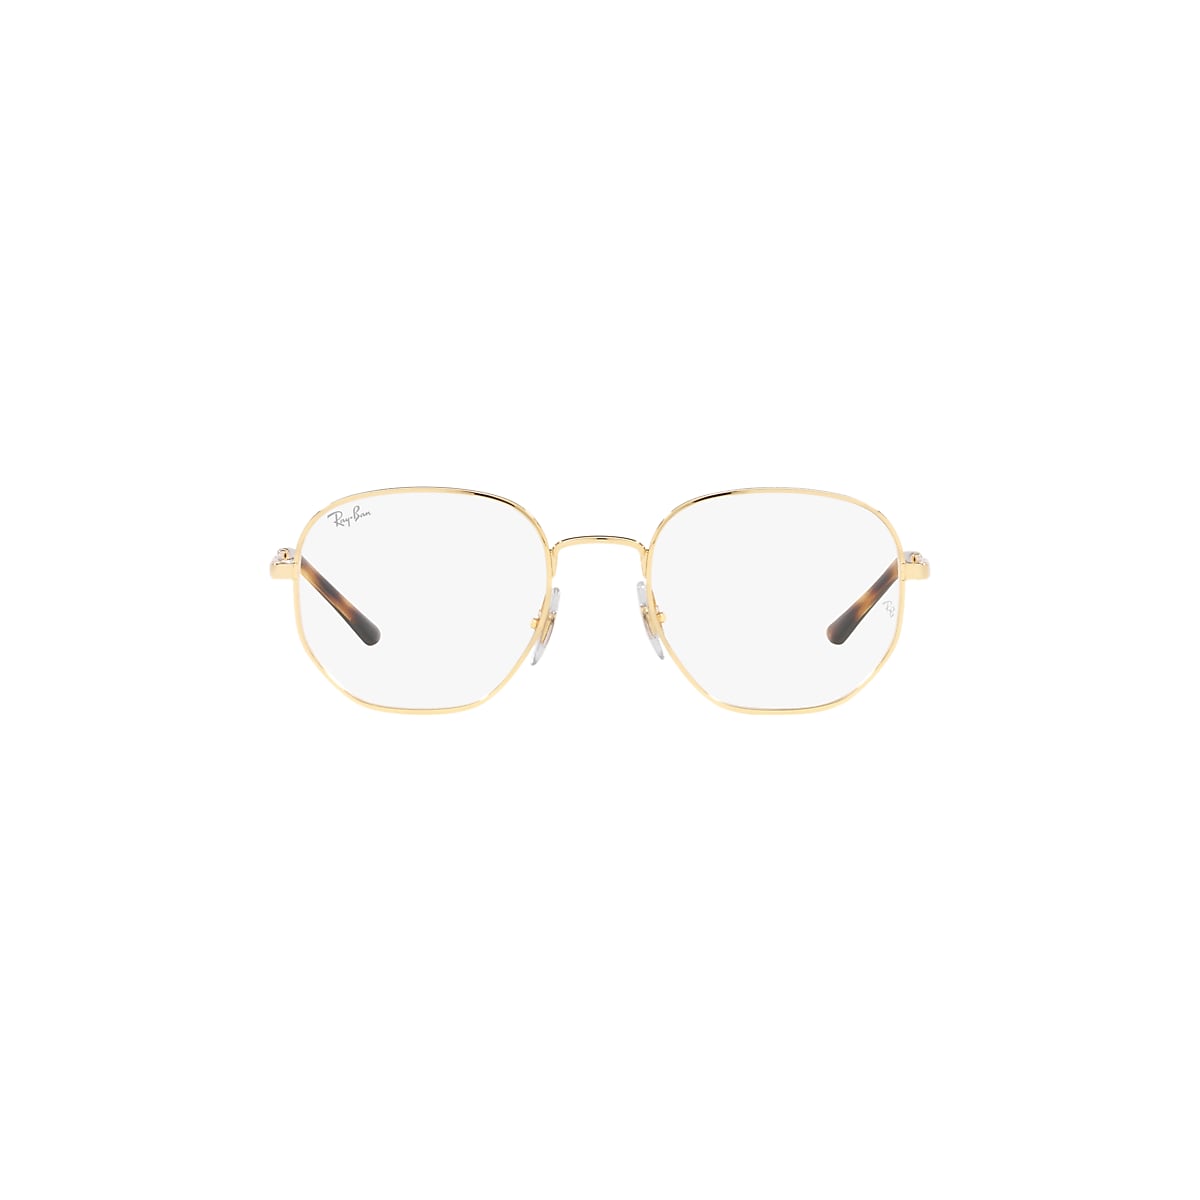 RB3682 OPTICS Eyeglasses with Gold Frame - RB3682V | Ray-Ban® US